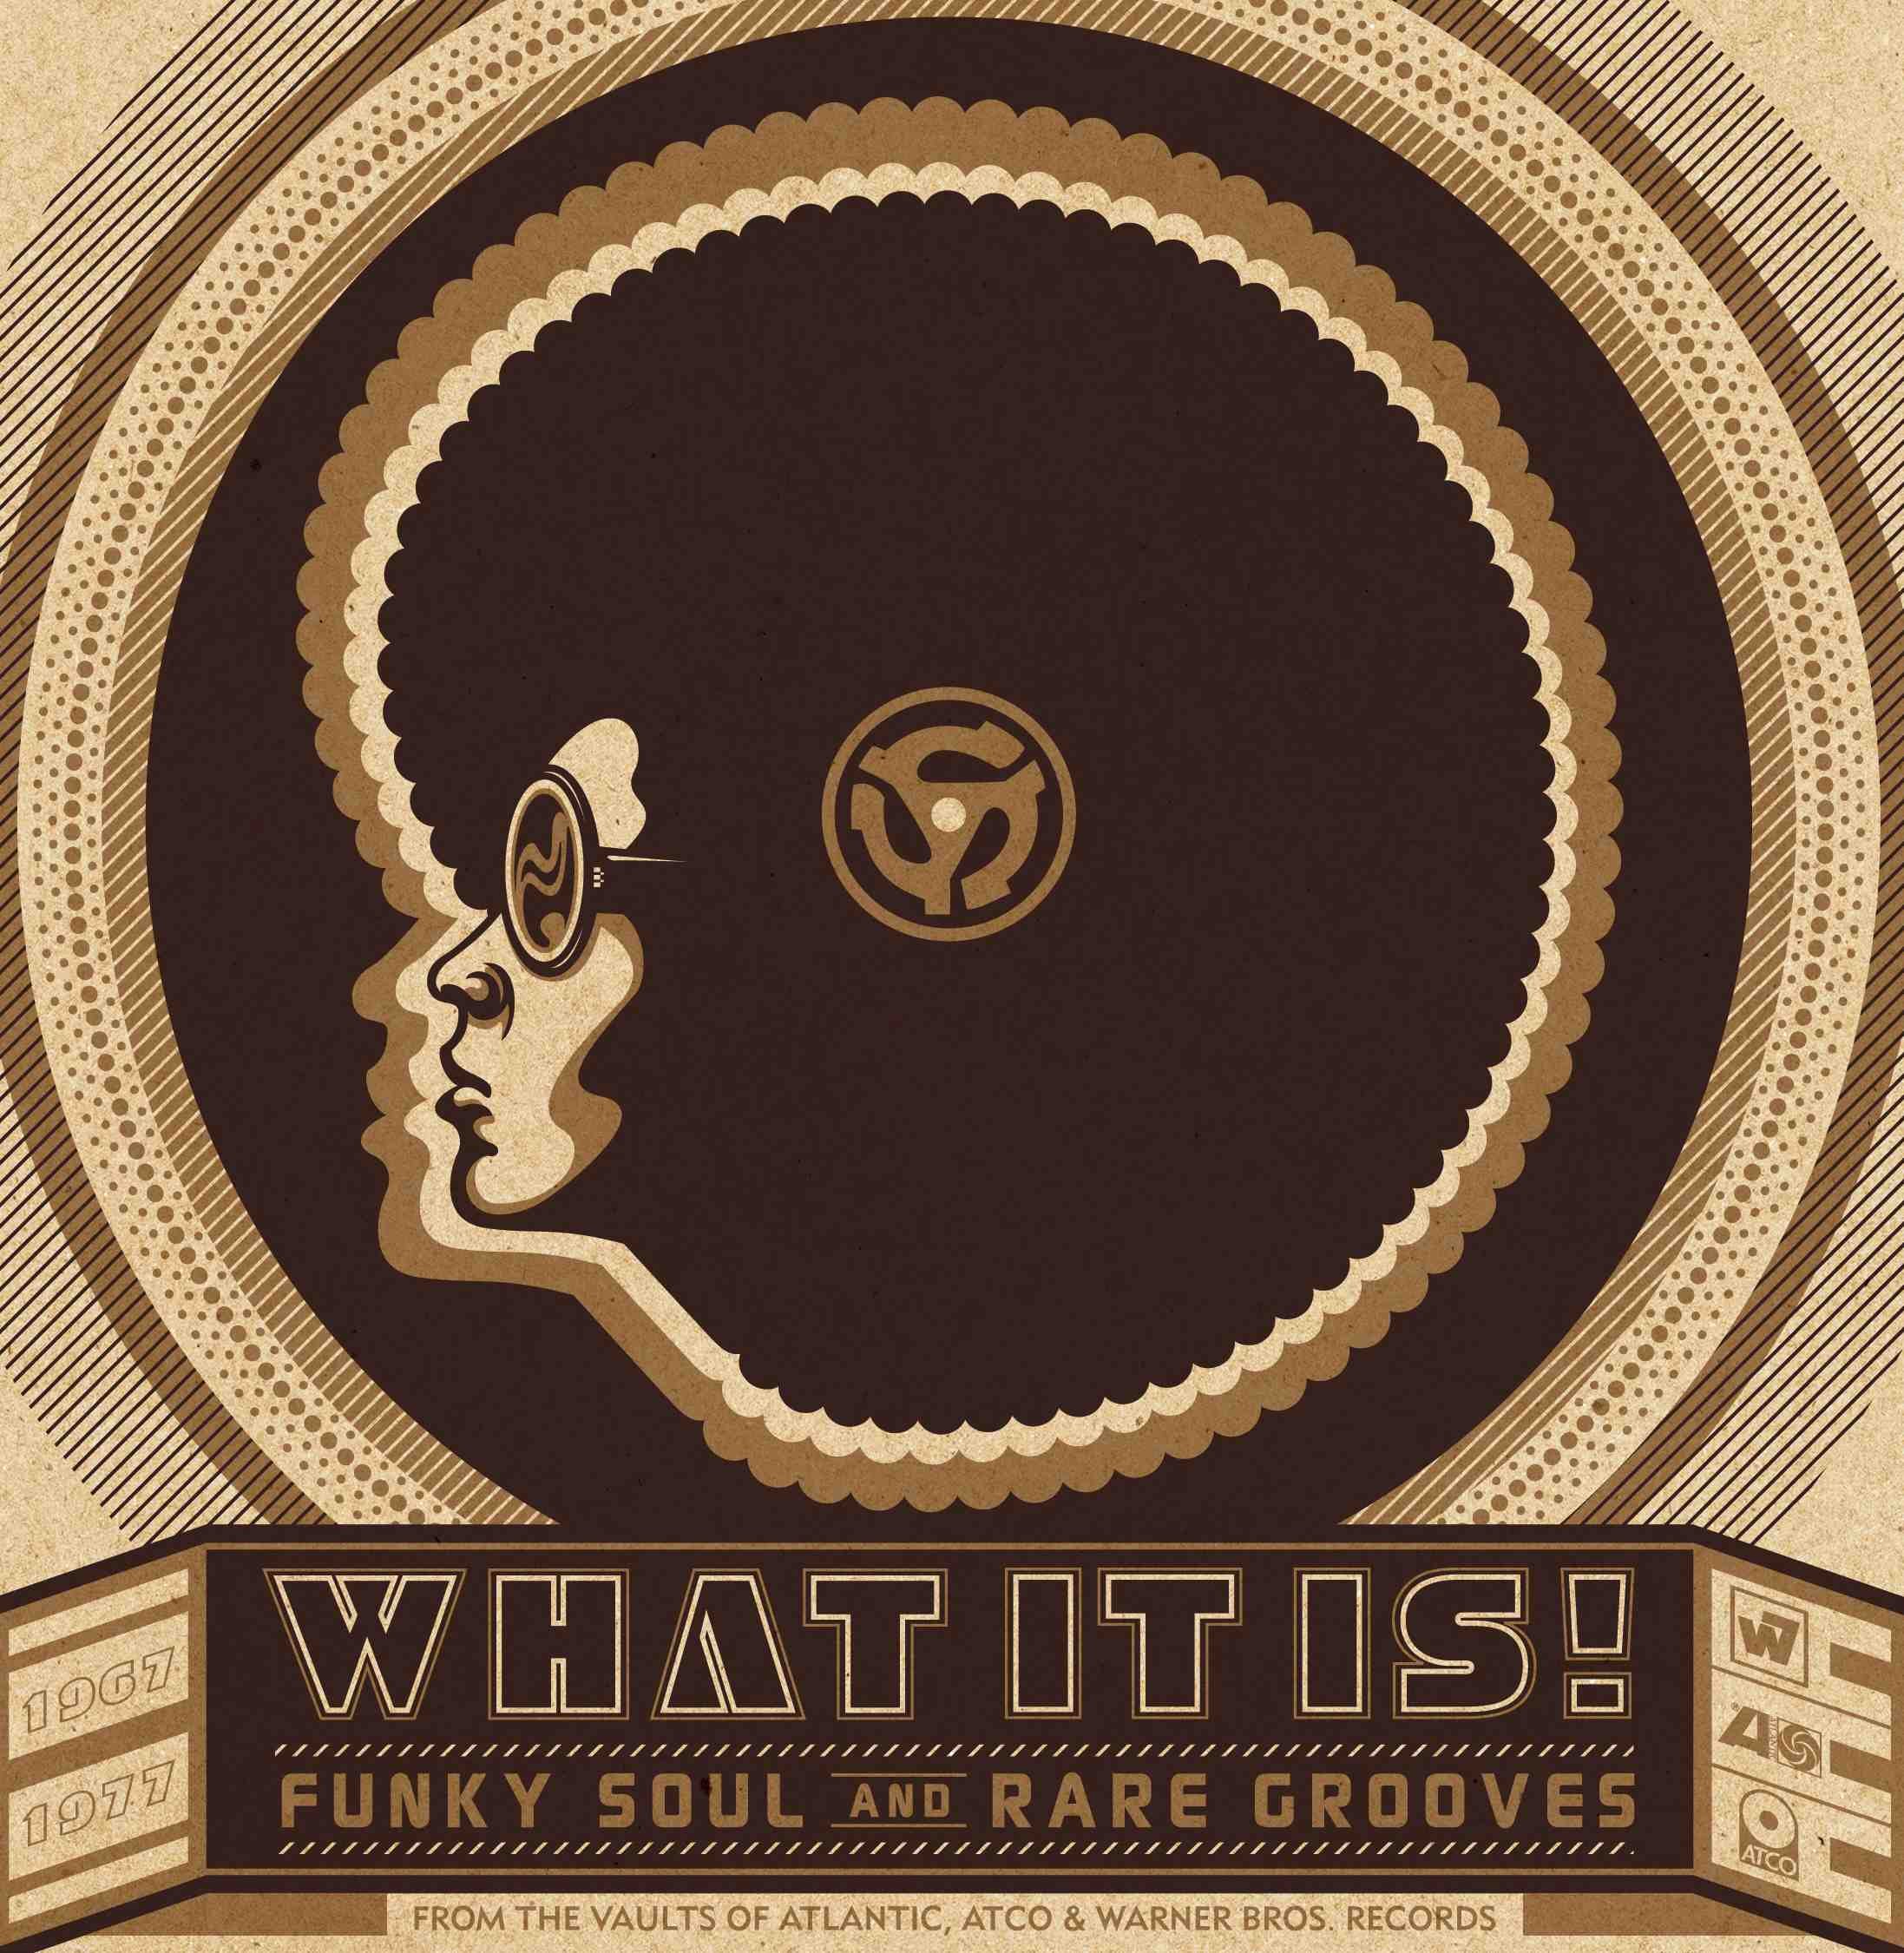 Funky souls. Soul Funk. Funky картинки. Funk Music. Funk / Soul / Disco.